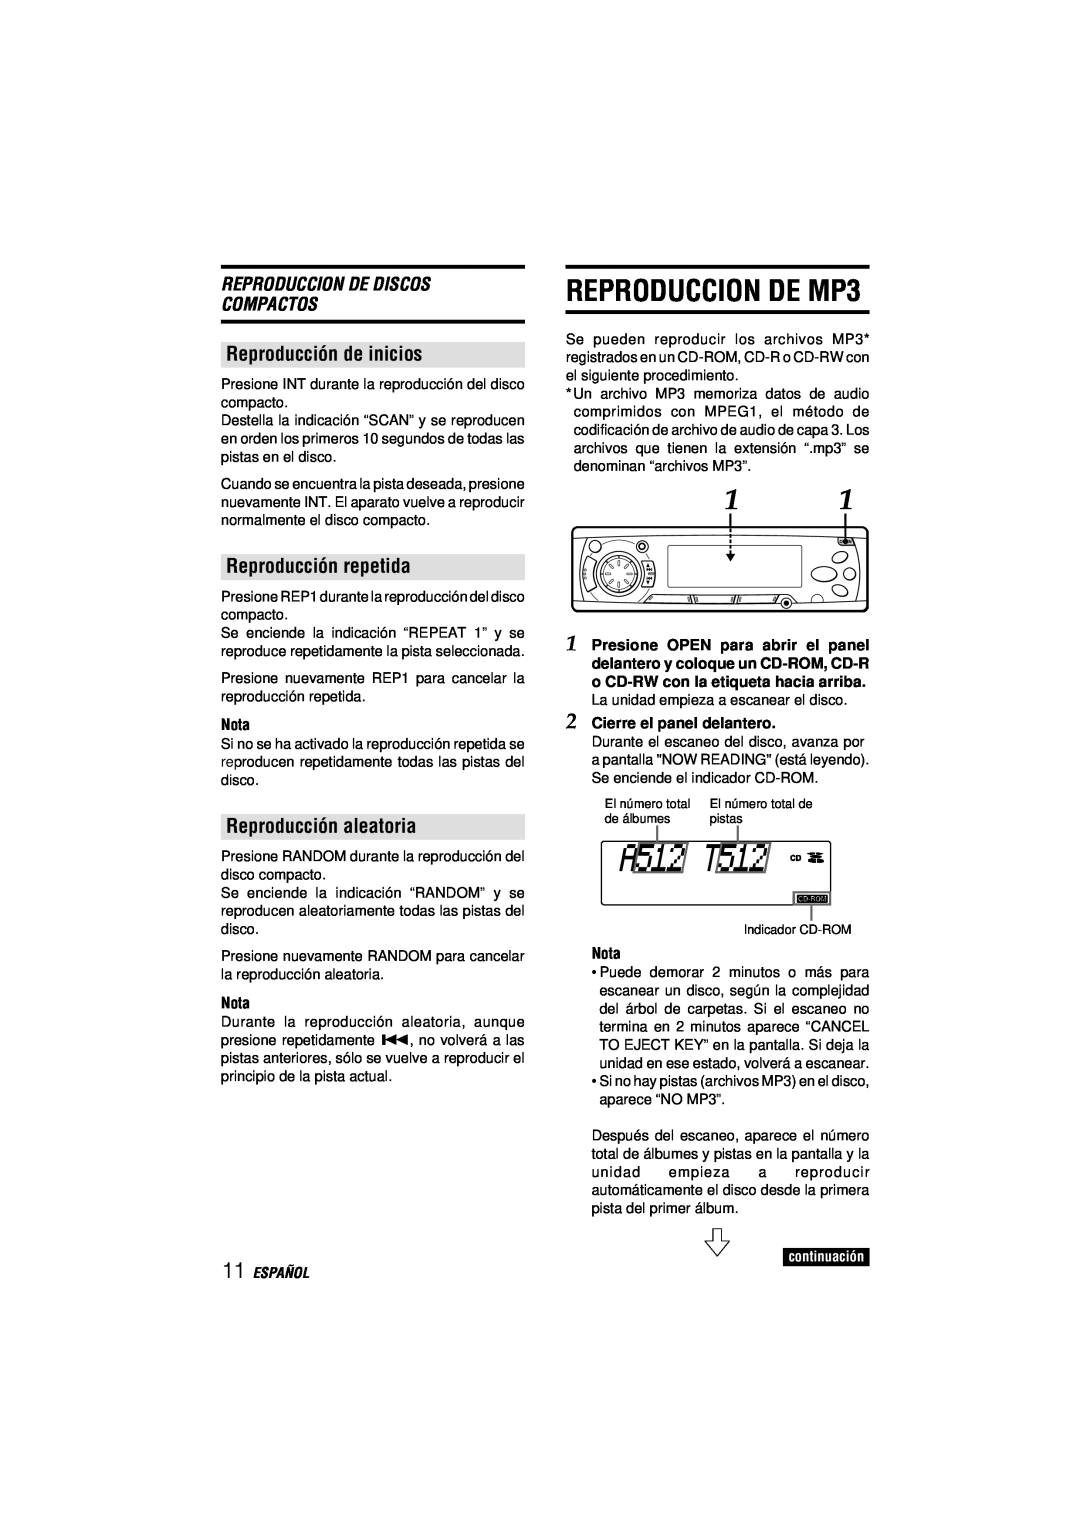 Aiwa CDC-MP3 manual REPRODUCCION DE MP3, Reproducción de inicios, Reproducción repetida, Reproducción aleatoria, Español 